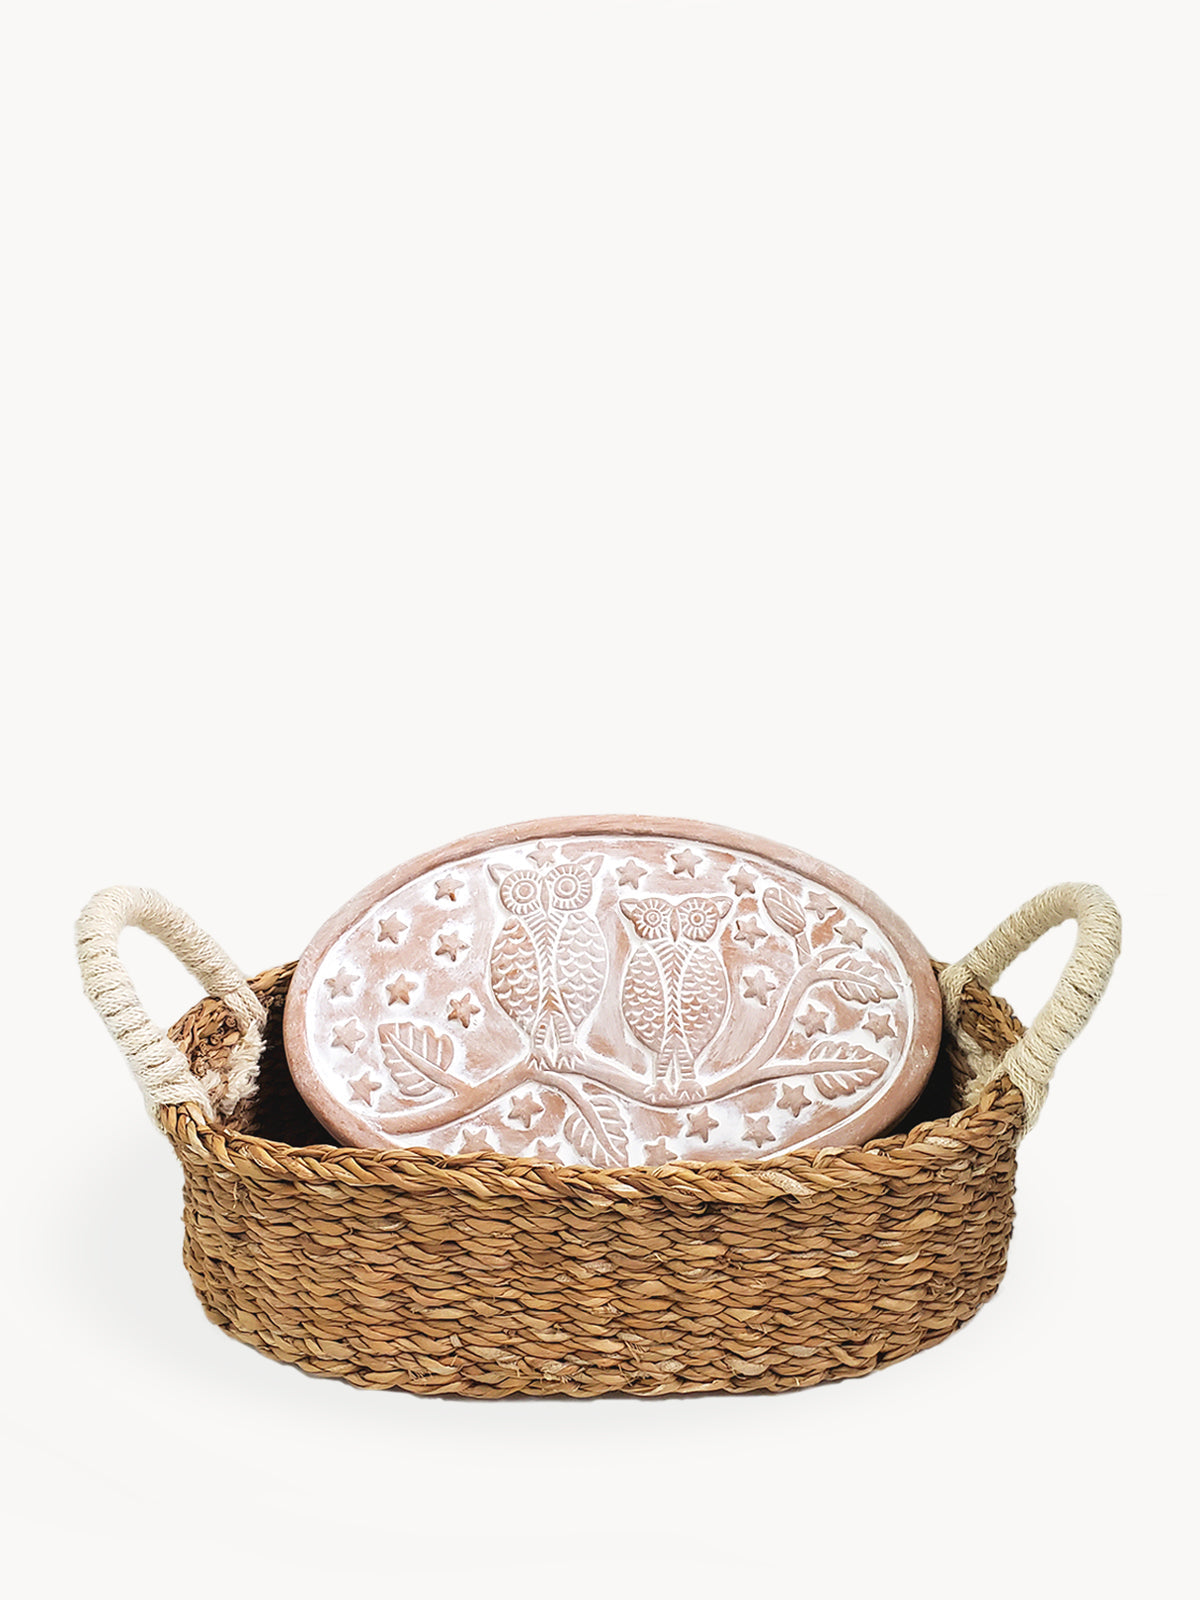 Buy Bread Warmer & Basket - Owl Oval by KORISSA by KORISSA